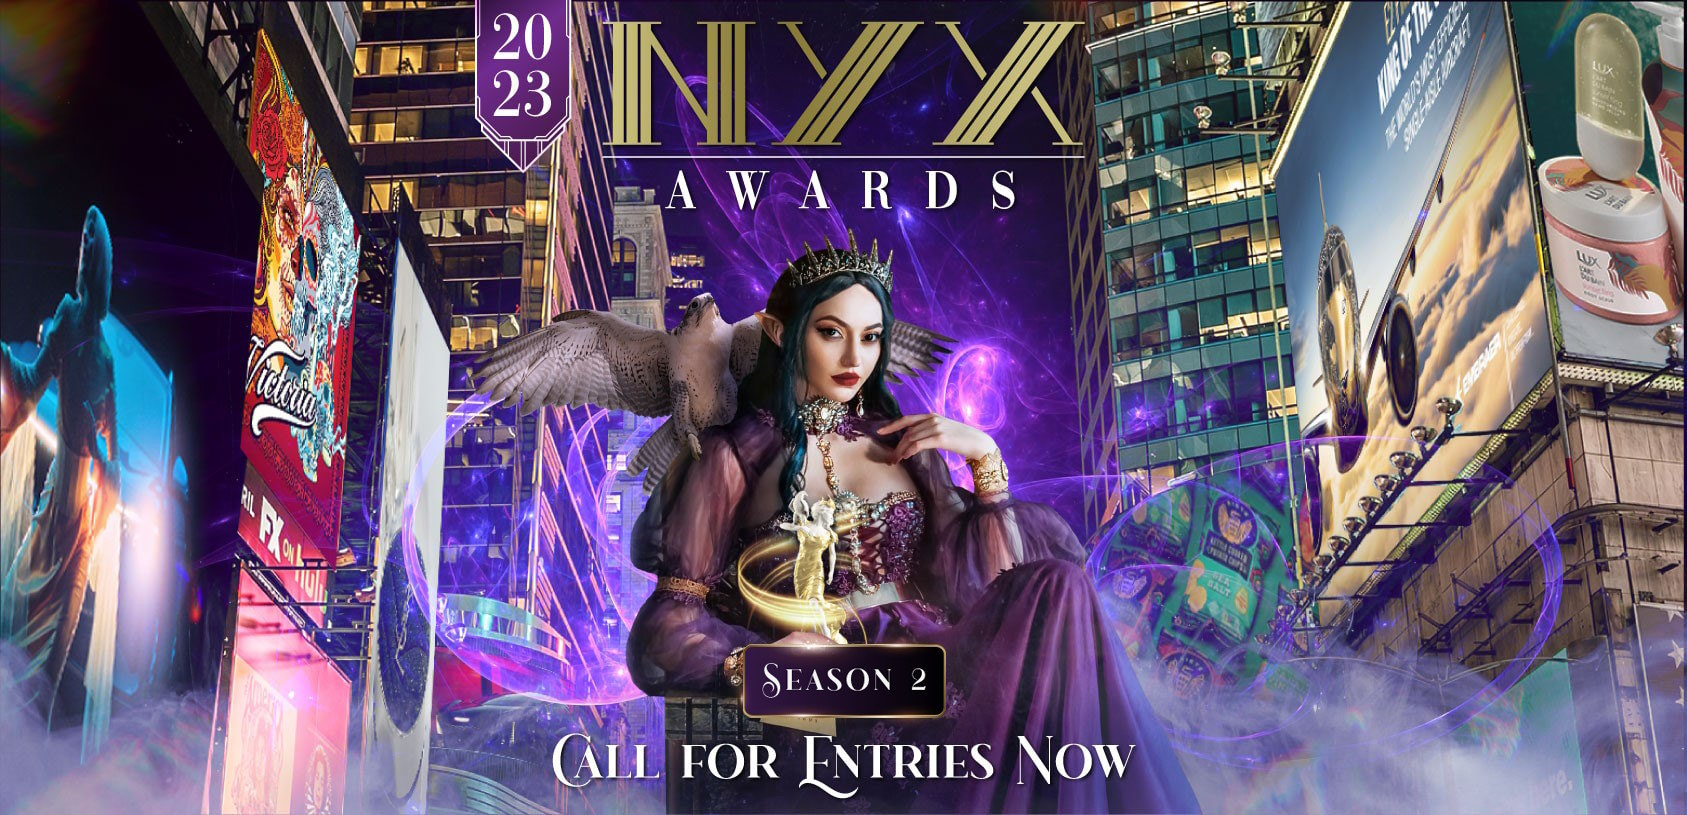 NYX Awards 2023 Call for Entries Now, NYX Marcom, NYX Video